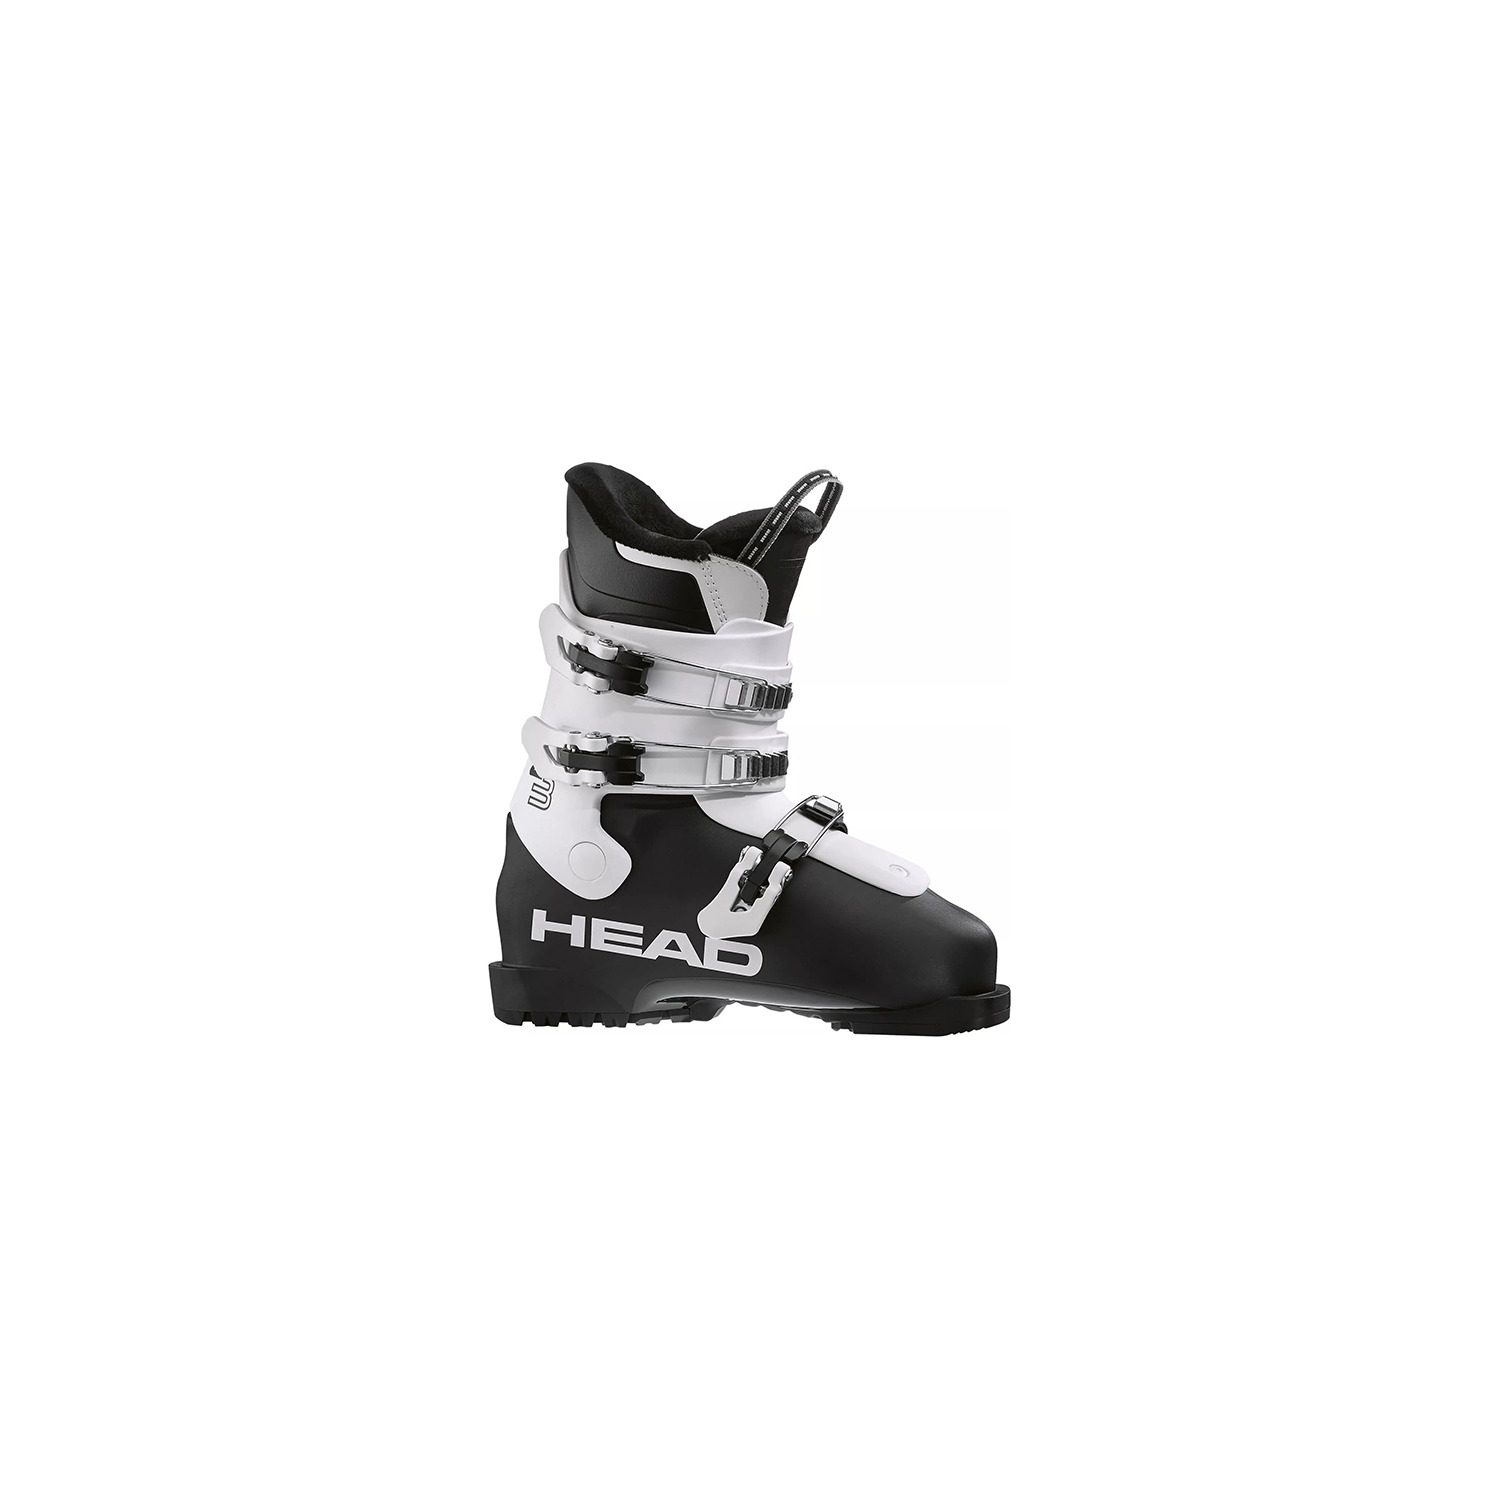 Горнолыжные ботинки Head Z3 Black/White 22/23, 23.5